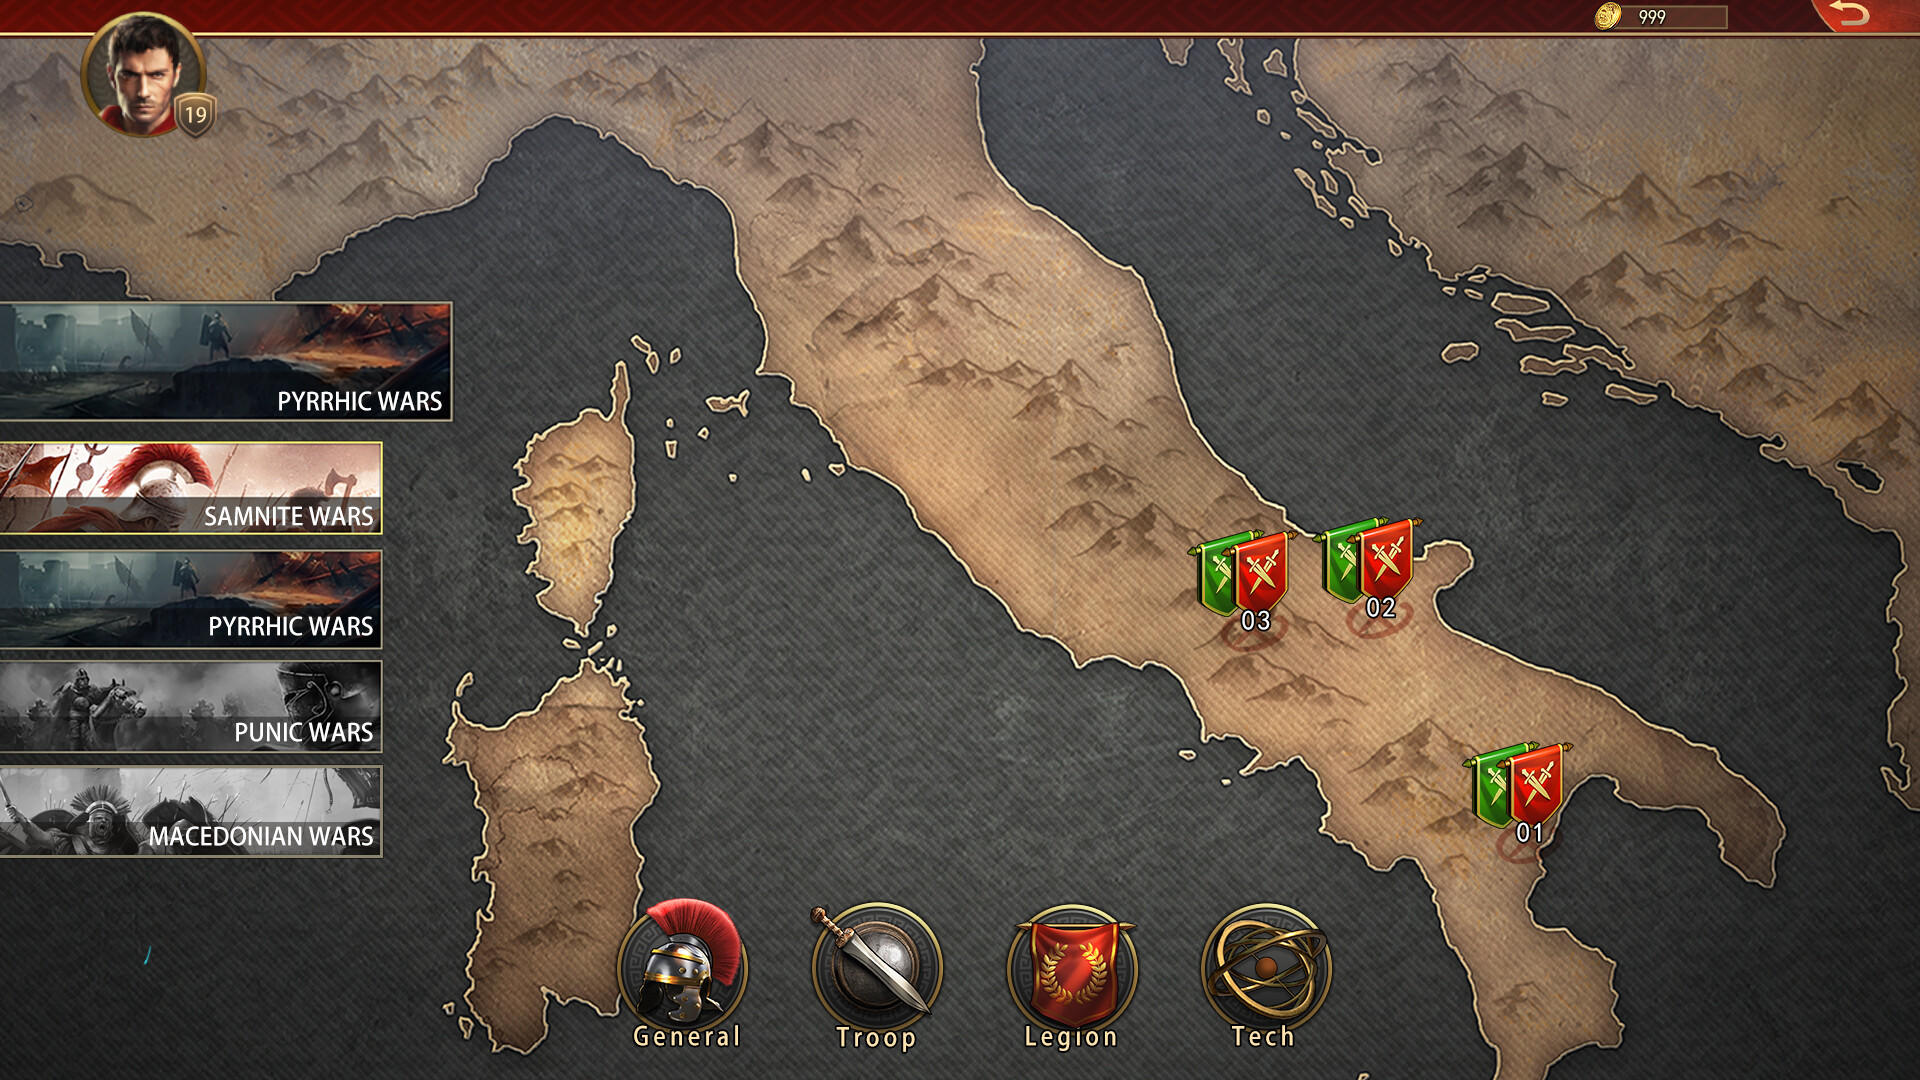 Grand War: Rome screenshot game